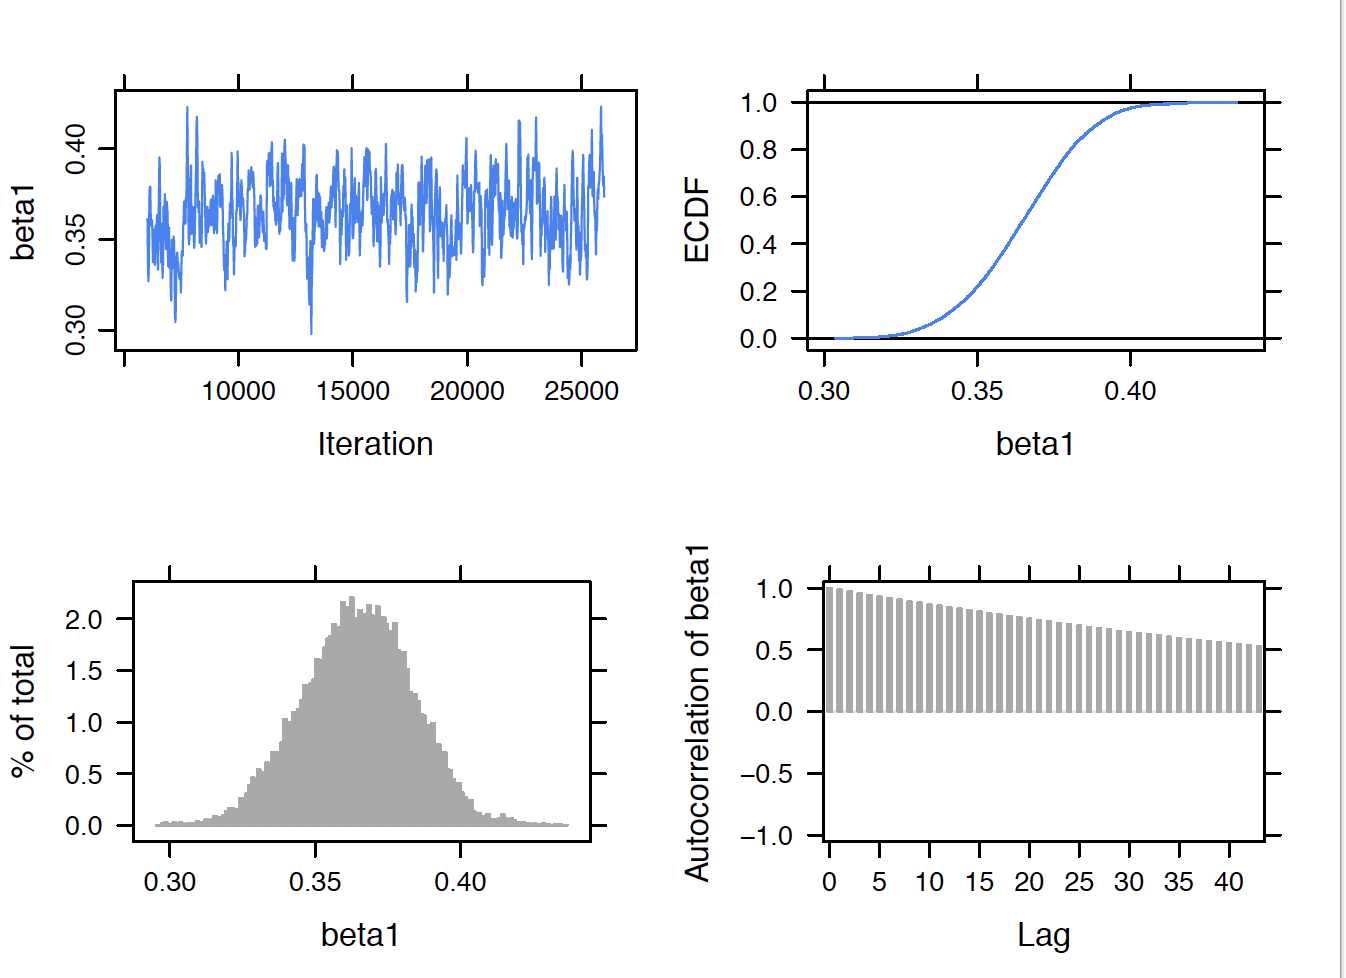 MCMC diagnostics plots for the regression slope parameter $eta_1$ for the log income predictor.